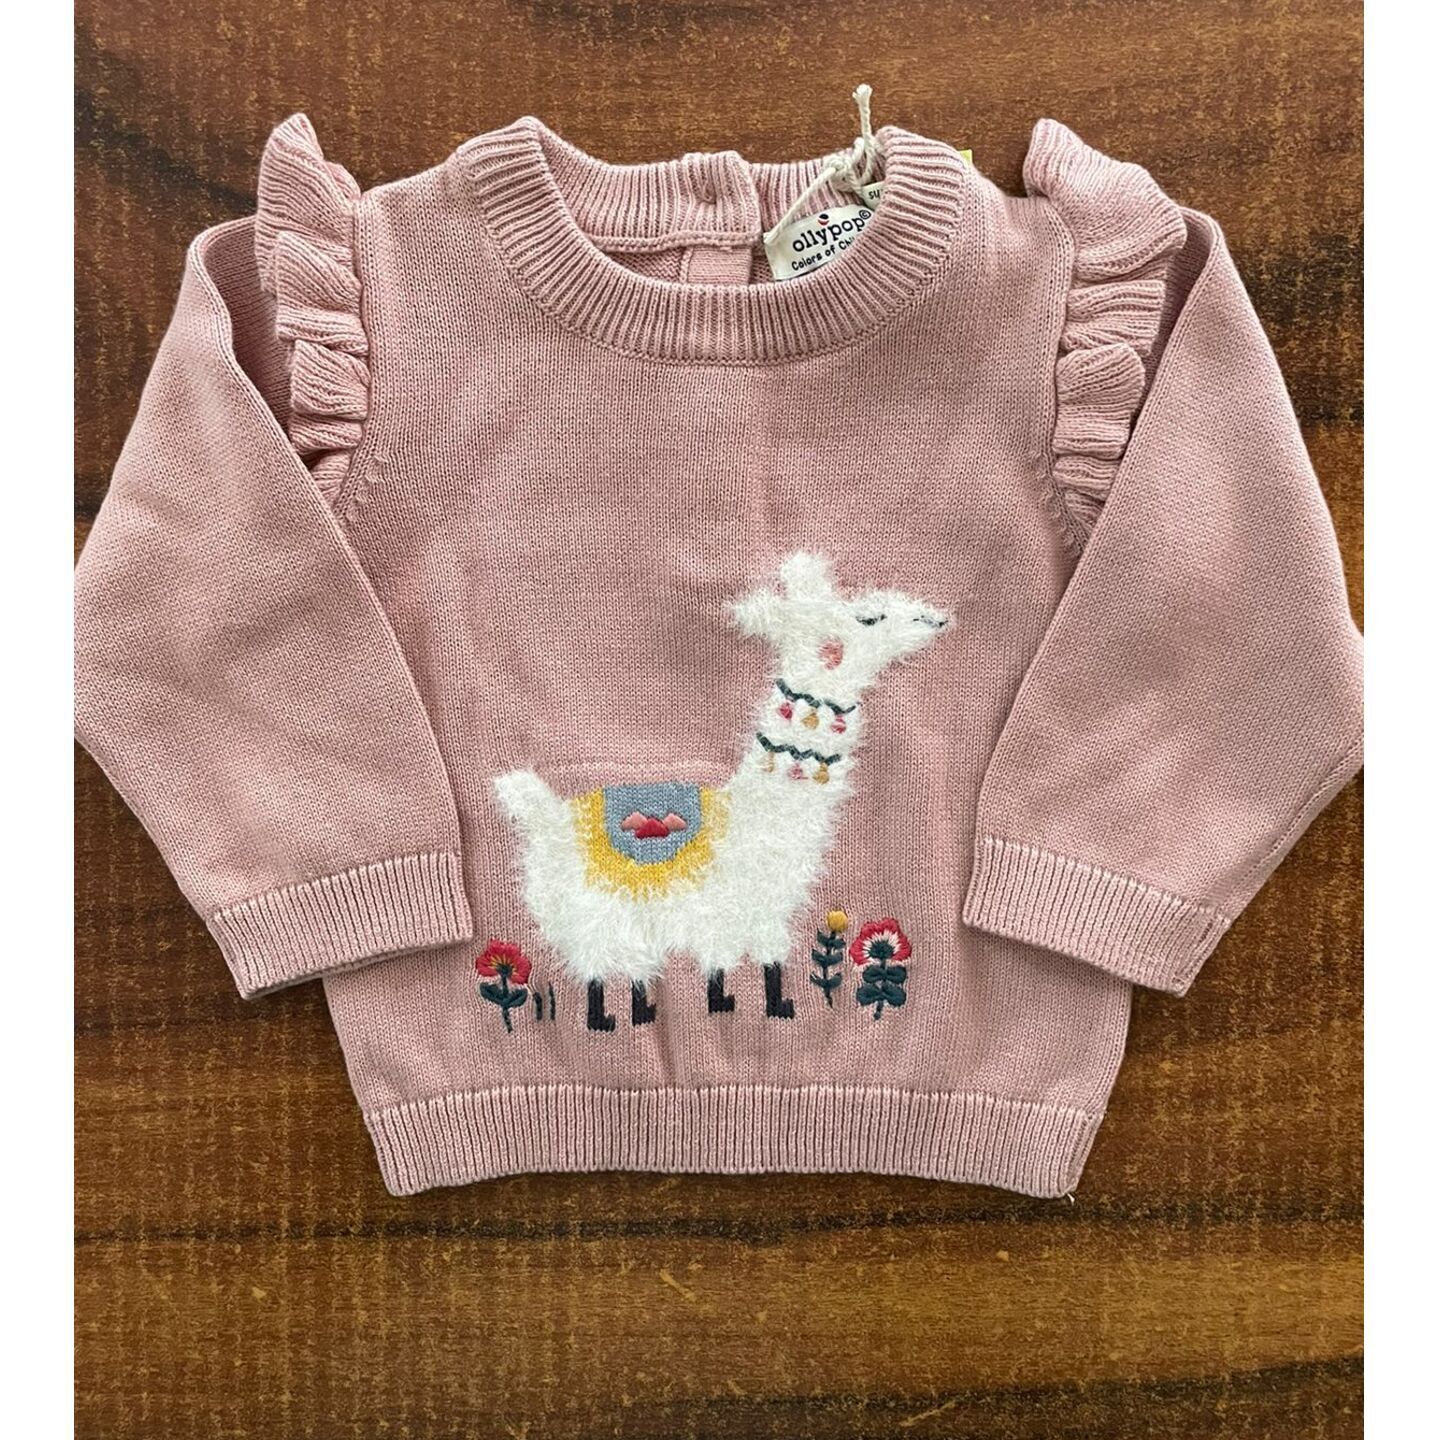 Ollypop Winter Sweater Newborn Infant 100 Organic Size Newborn to 18 Months